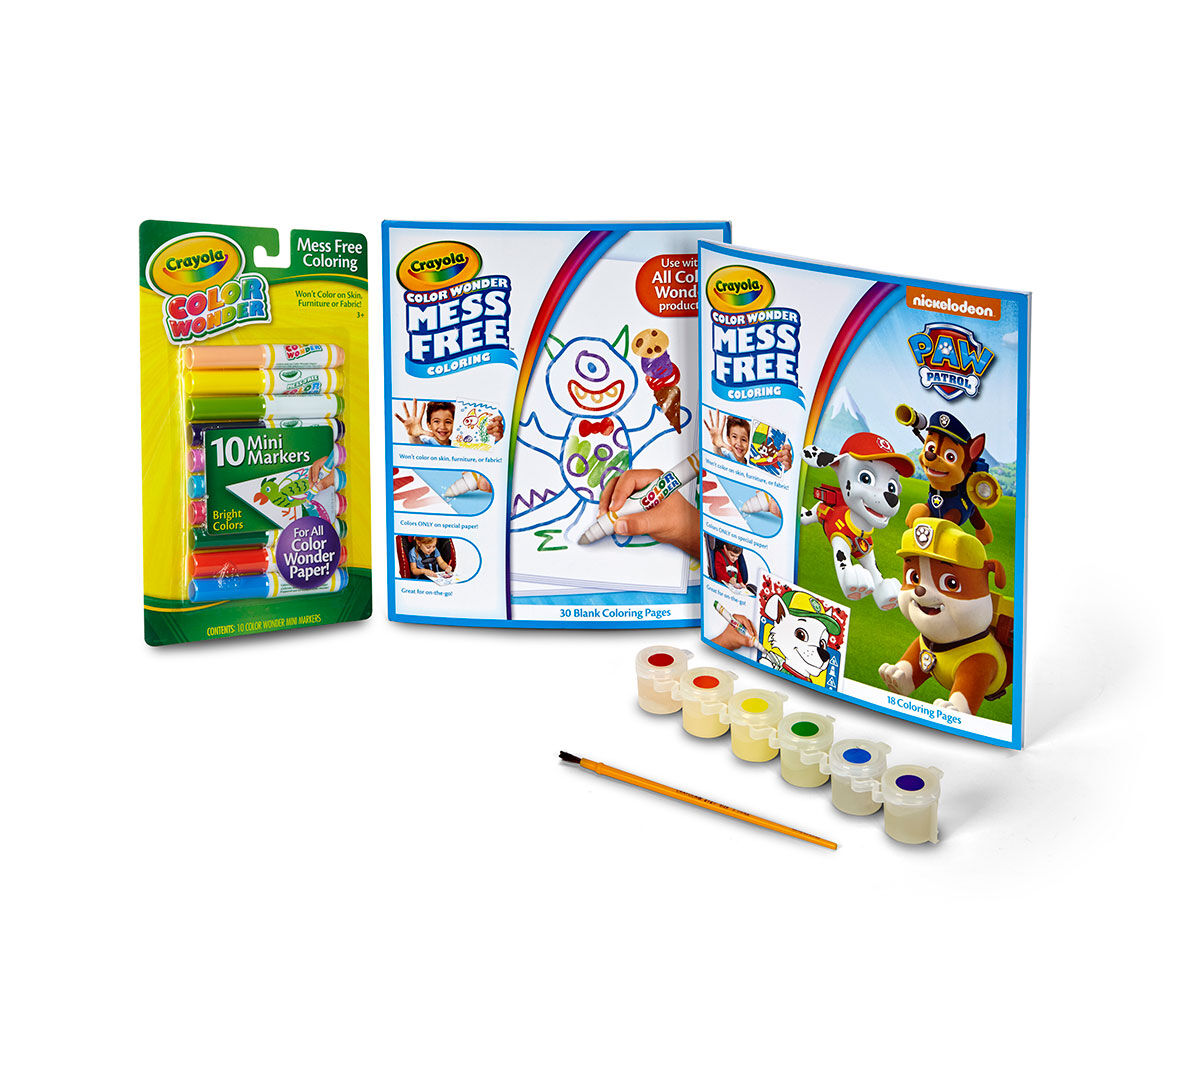 Paw Patrol Disney Princess Colour Your Own Activity Box Kids Toy Art Craft Set 